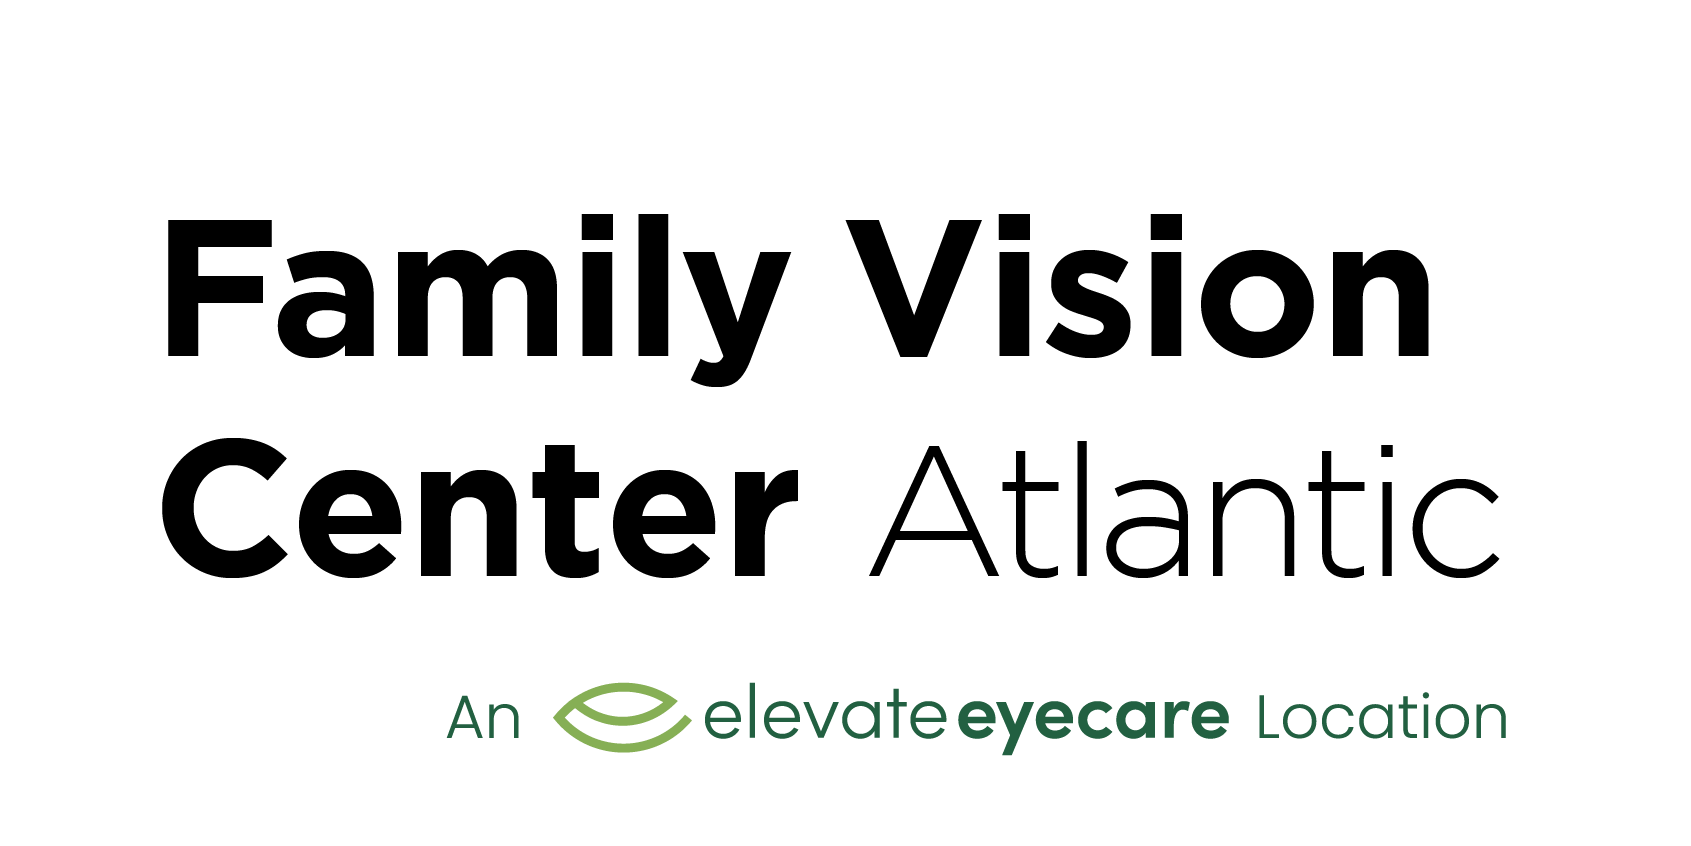 Family Vision Center Atlantic Logo